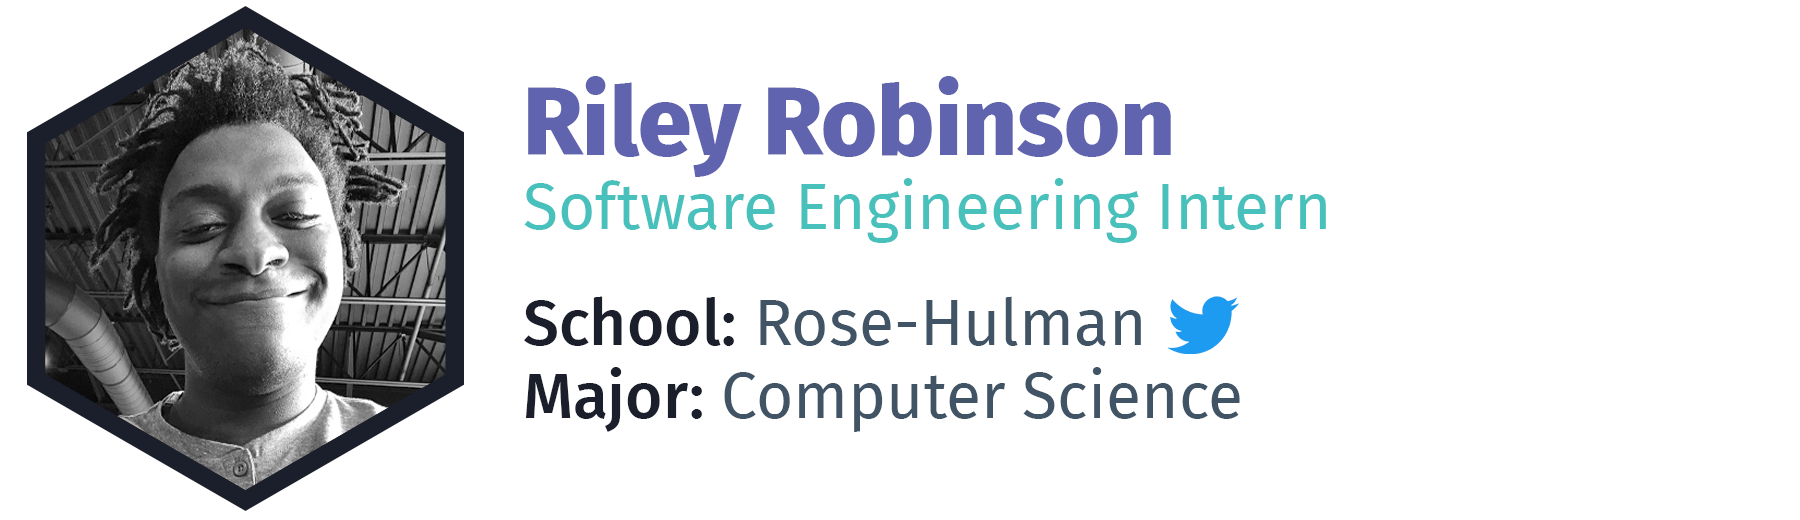 Riley Robinson - Software Engineering Intern